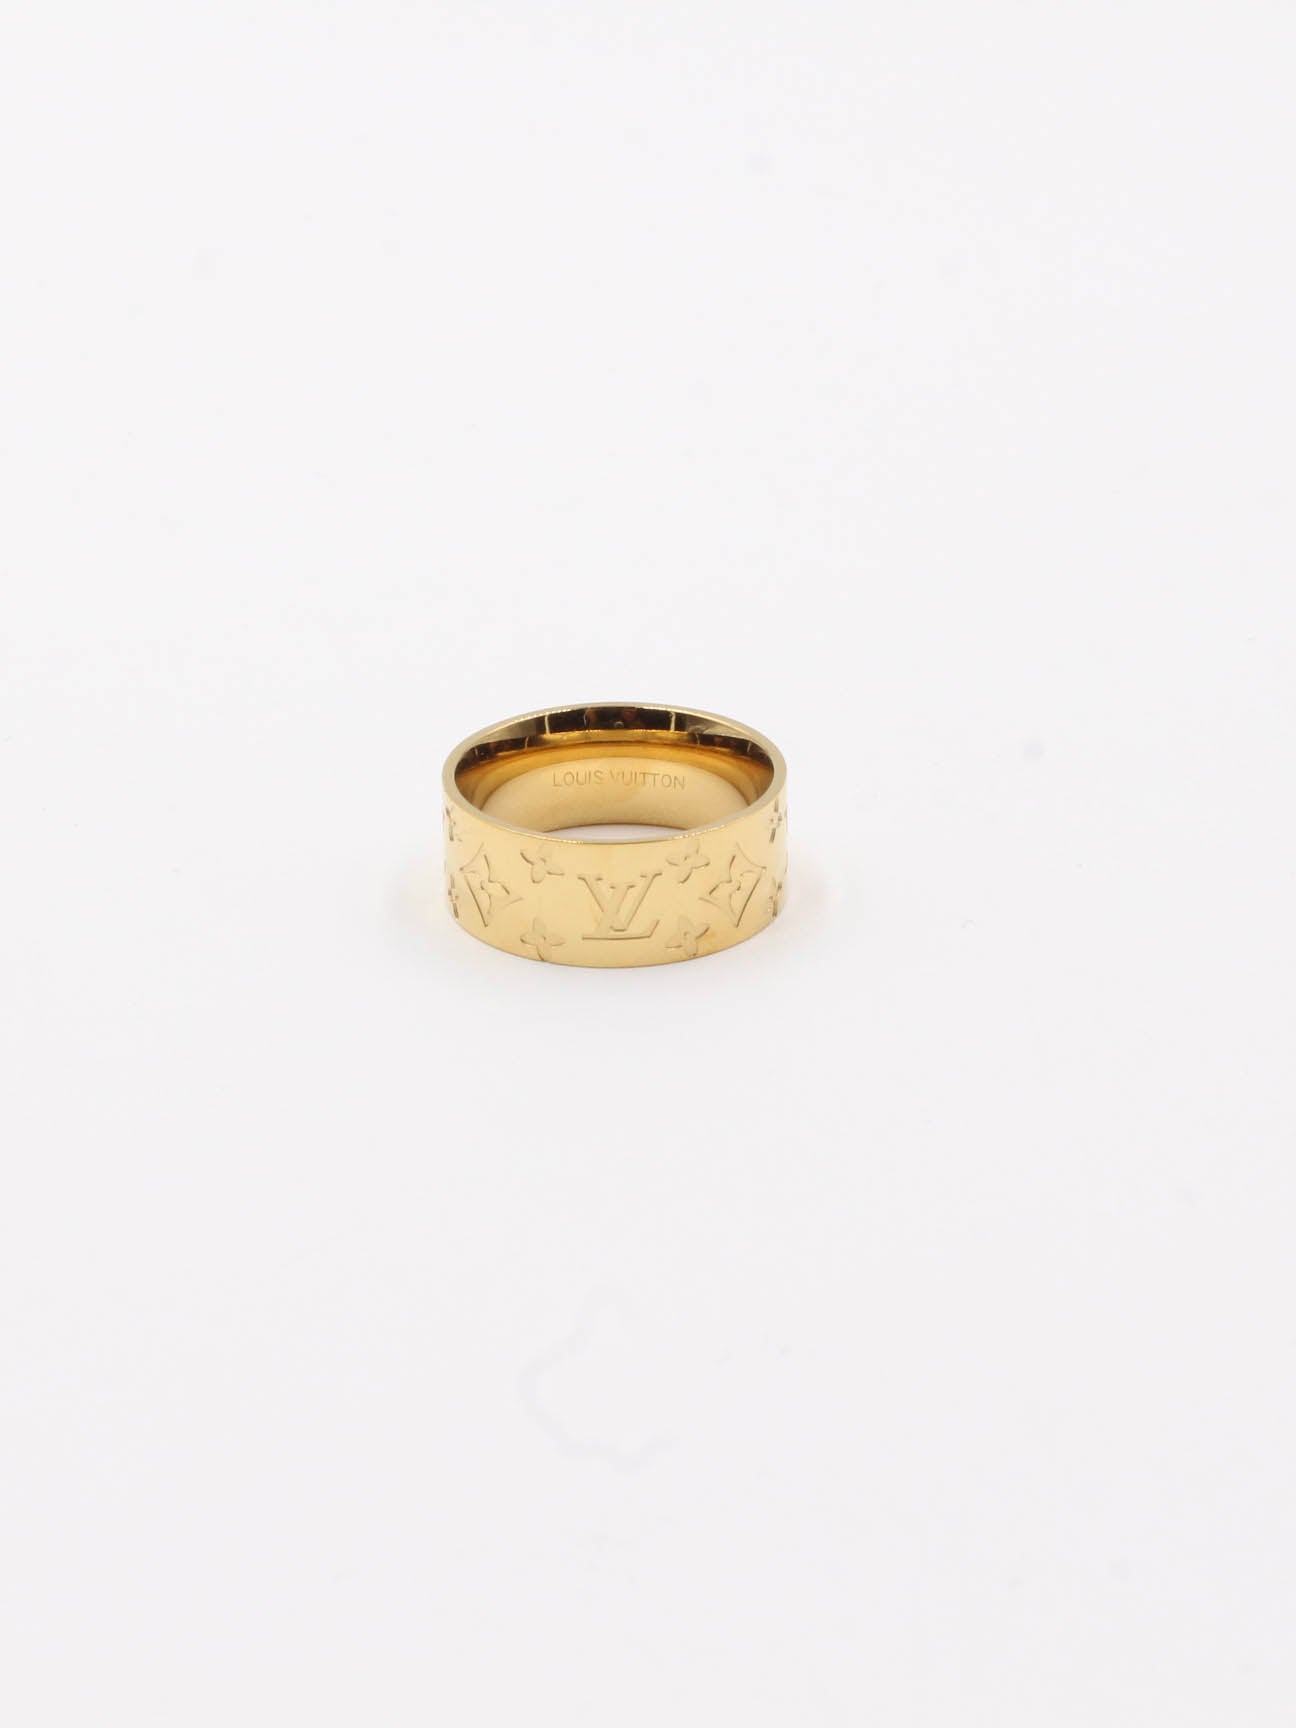 Louis Vuitton wide ring - خاتم لويس فيتون عريض خواتم Jewel ذهبي 6 